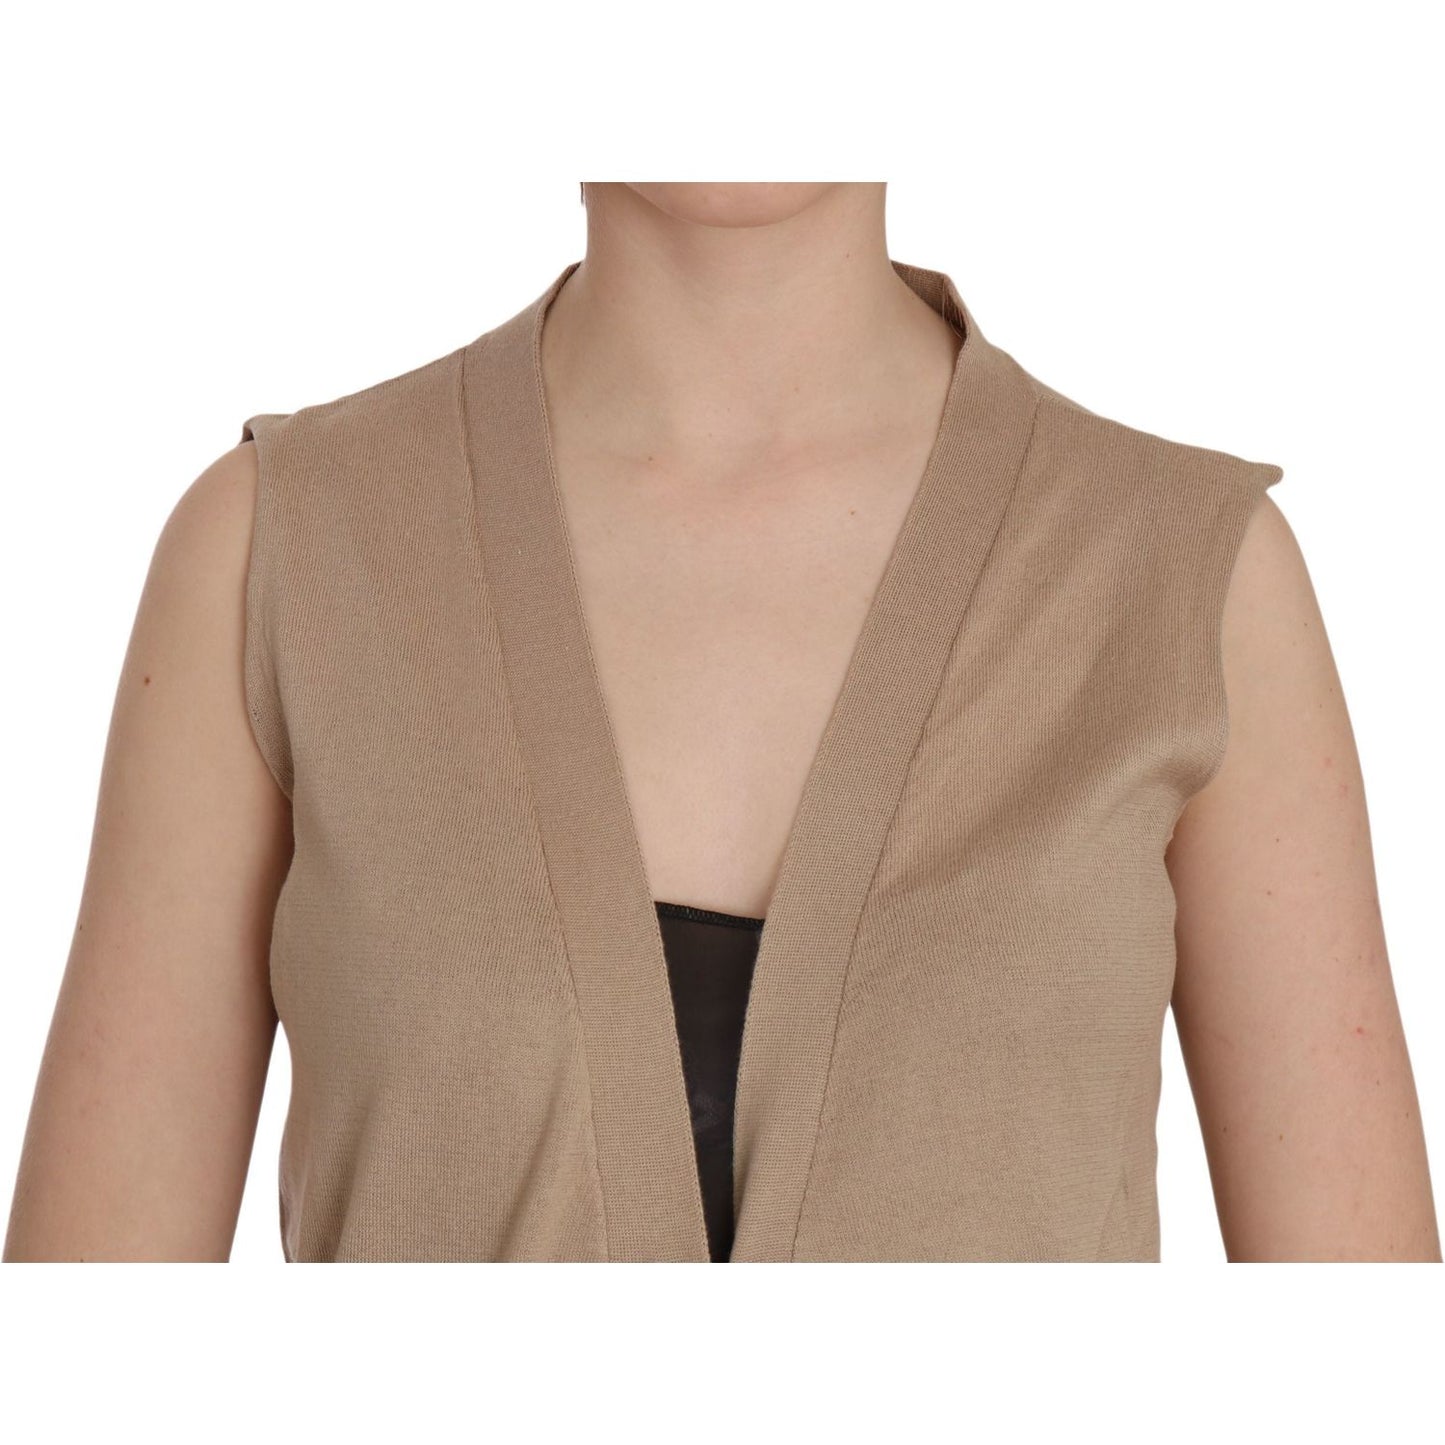 PINK MEMORIES Elegant Sleeveless Cotton Vest brown-100-cotton-sleeveless-cardigan-top-vest-1 IMG_1910-scaled-0c797b71-8b5.jpg